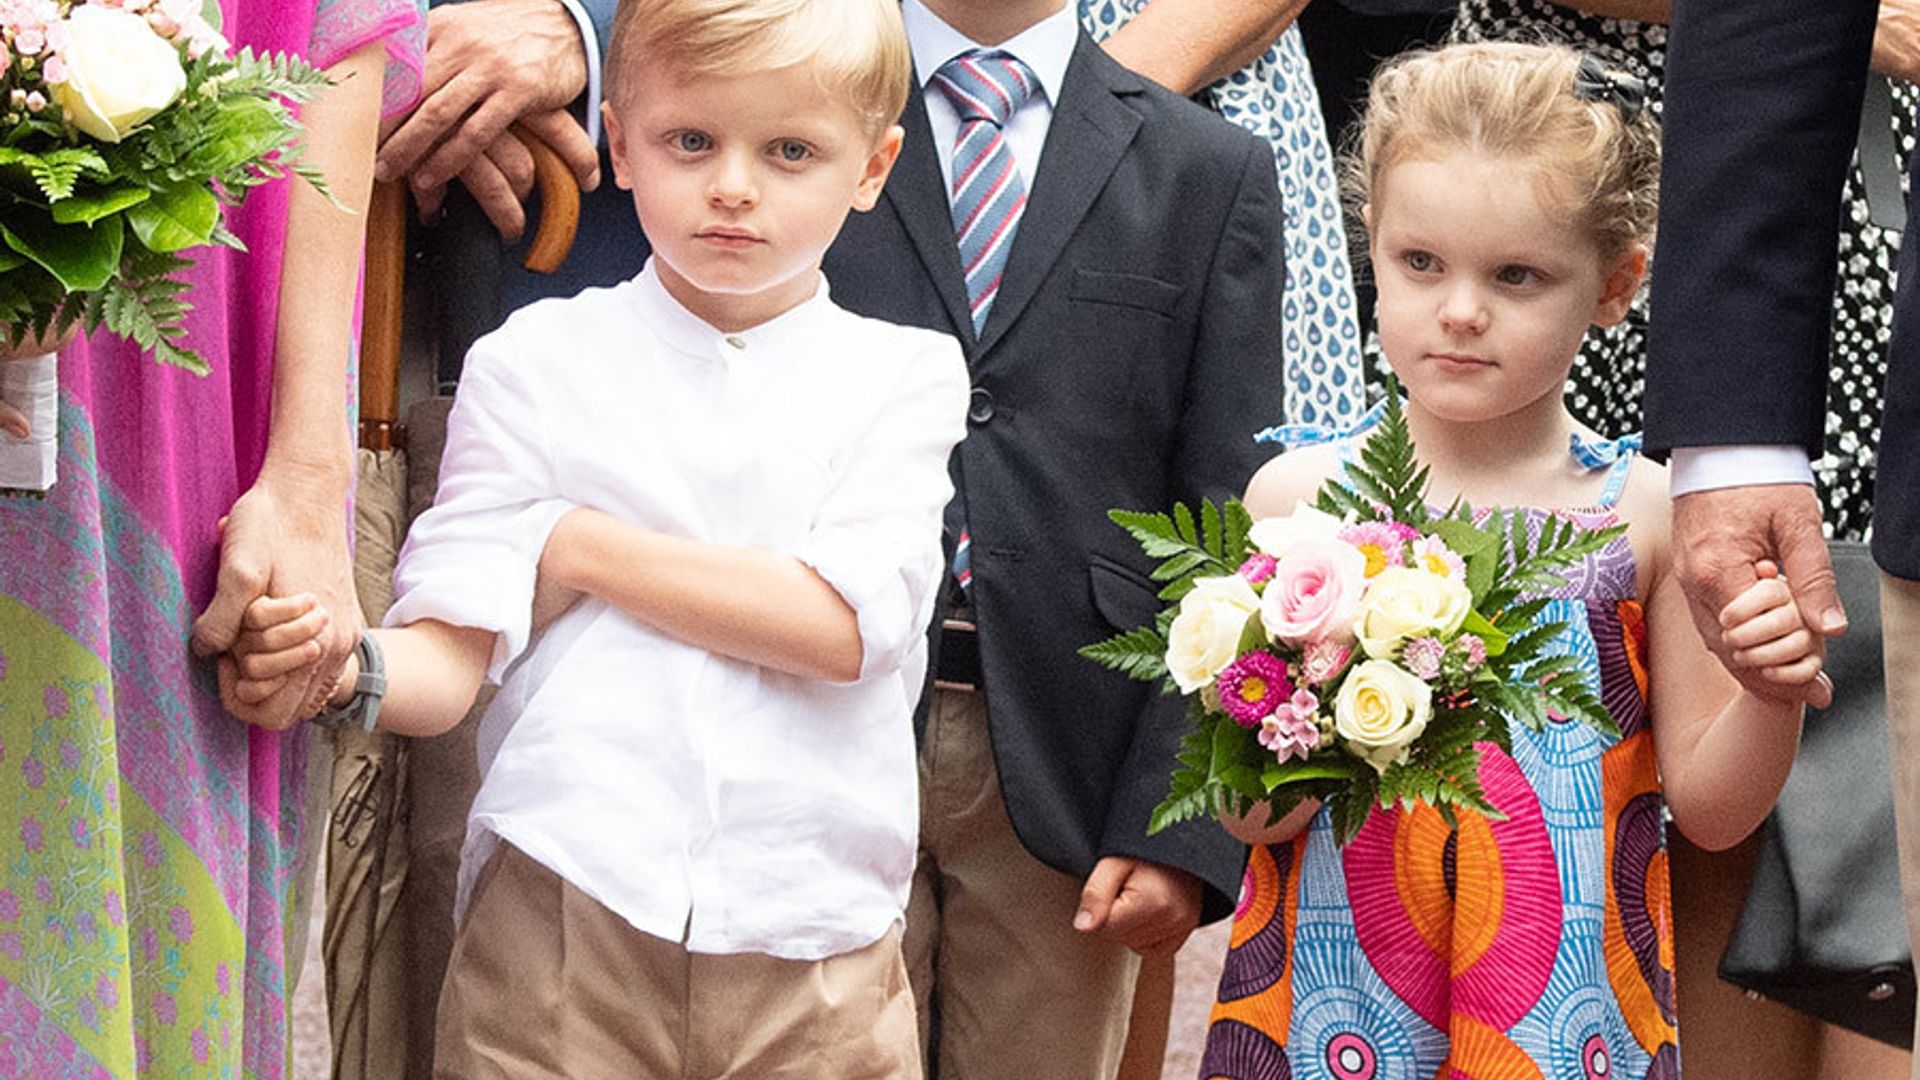 Princess Charlene of Monaco reveals the sweet bond shared by twins Prince Jacques and Princess Gabriella